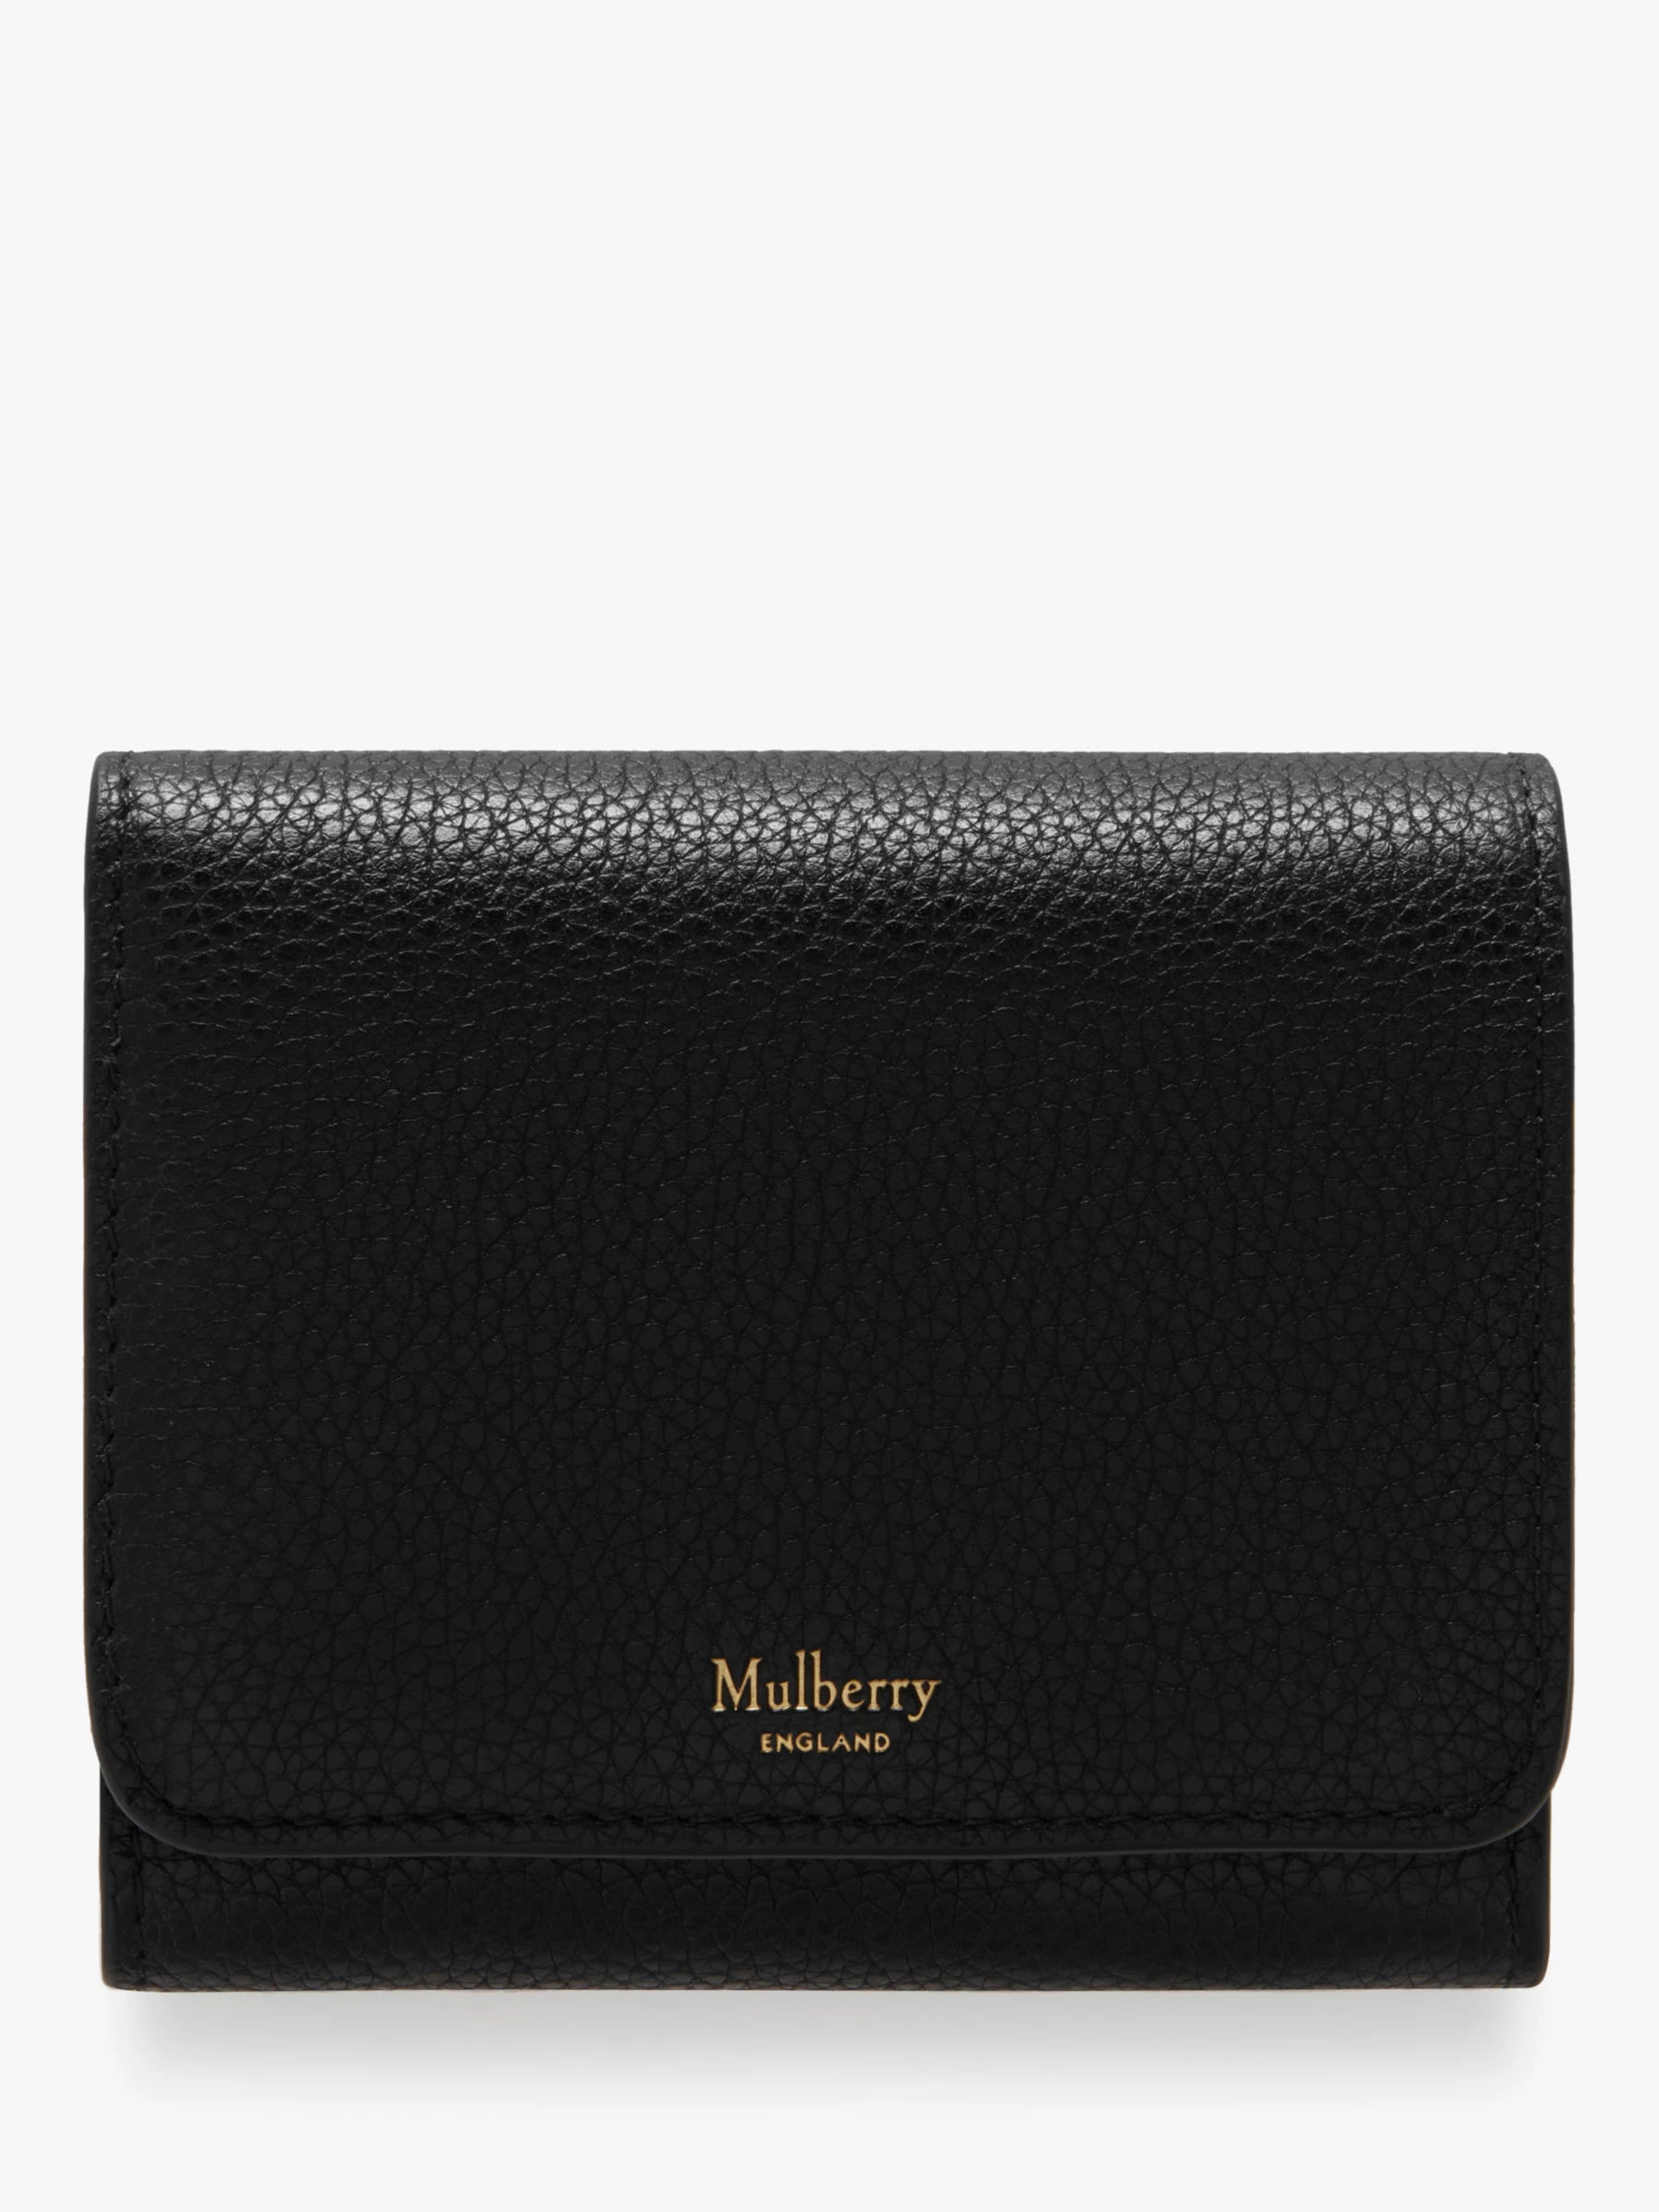 Mulberry Small Antony Leather Crossbody Bag - A100 Black | Editorialist